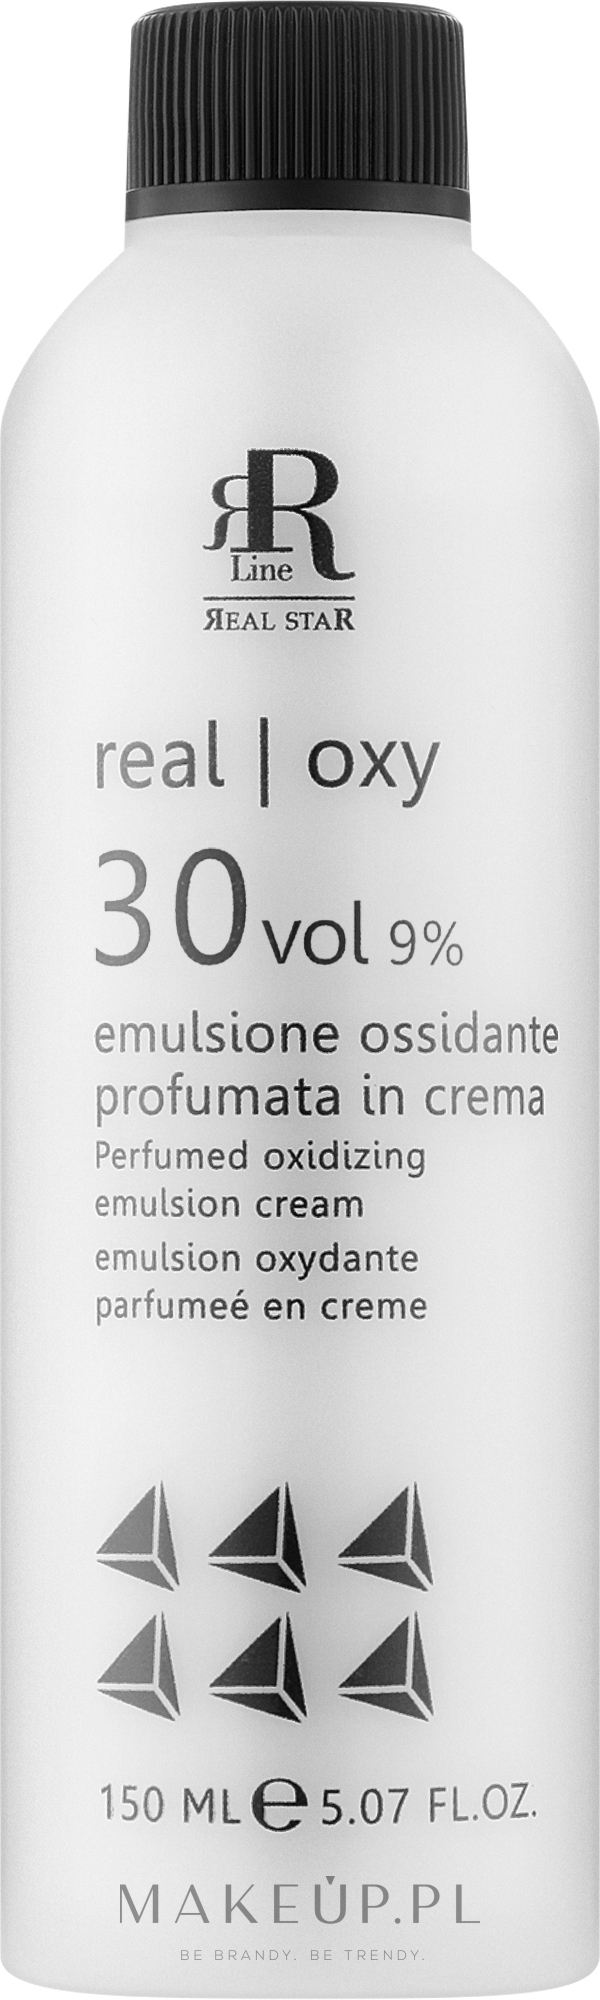 Perfumowana emulsja utleniająca 9% - RR Line Parfymed Ossidante Emulsione Cream 9% 30 Vol — Zdjęcie 150 ml